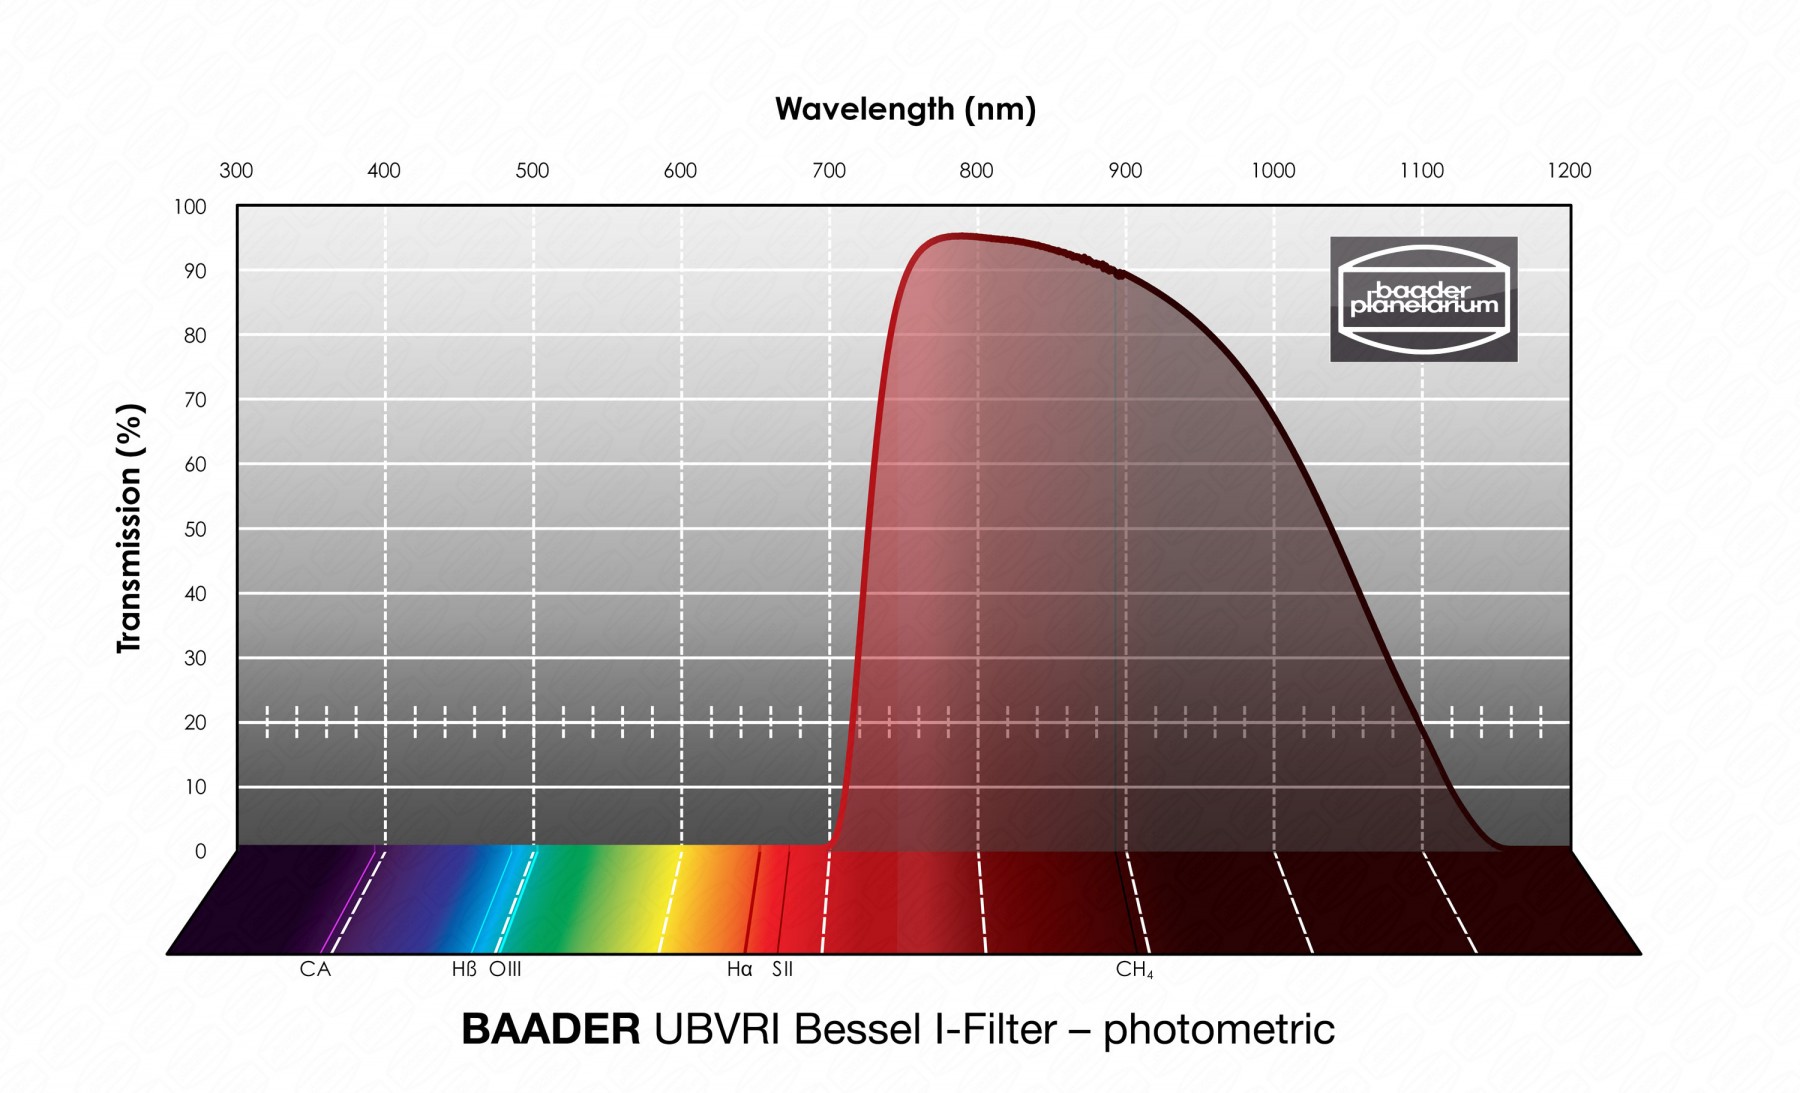 baader-ubvri-bessel-i-filter-photometric-3b0.jpg